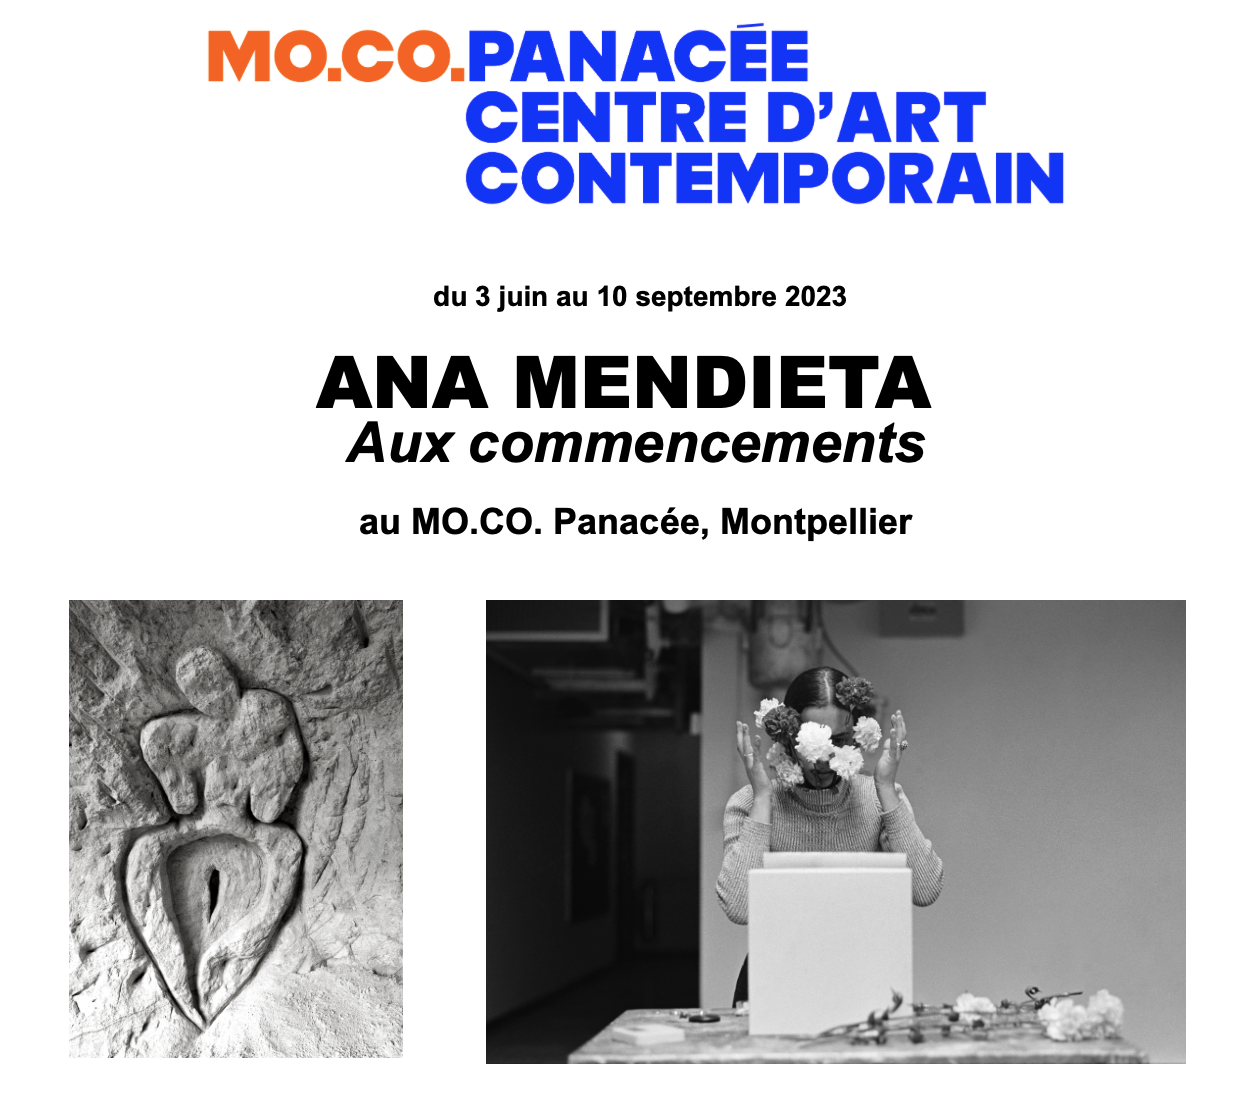 Ana Mendieta au MO.CO. Panacée - Montpellier